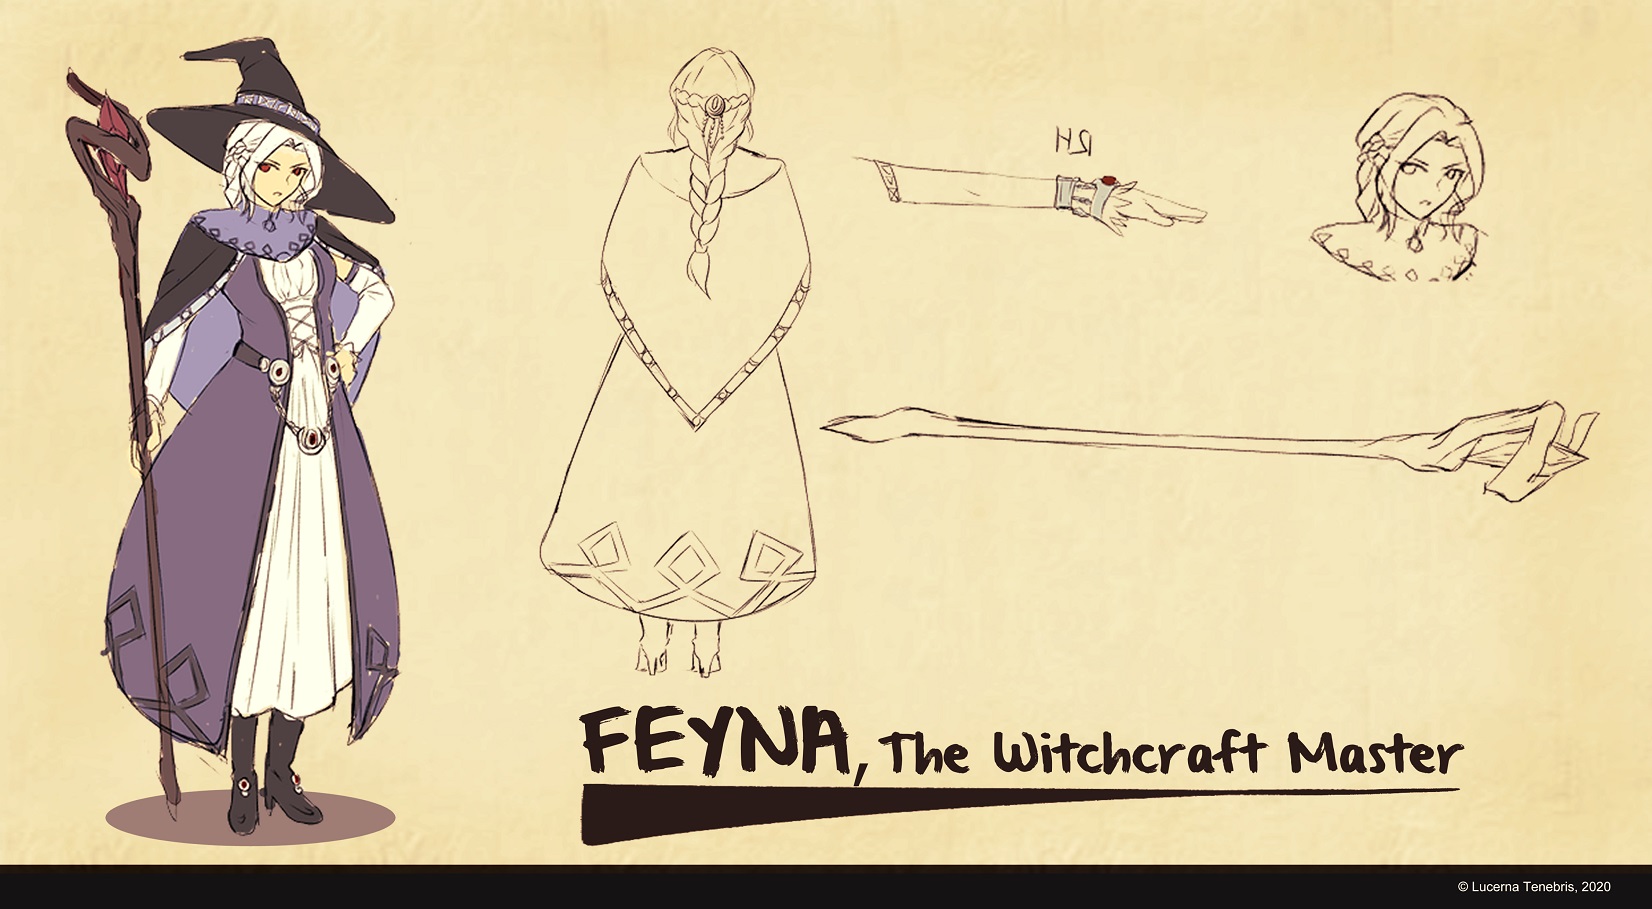 Feyna, The Witchcraft Master